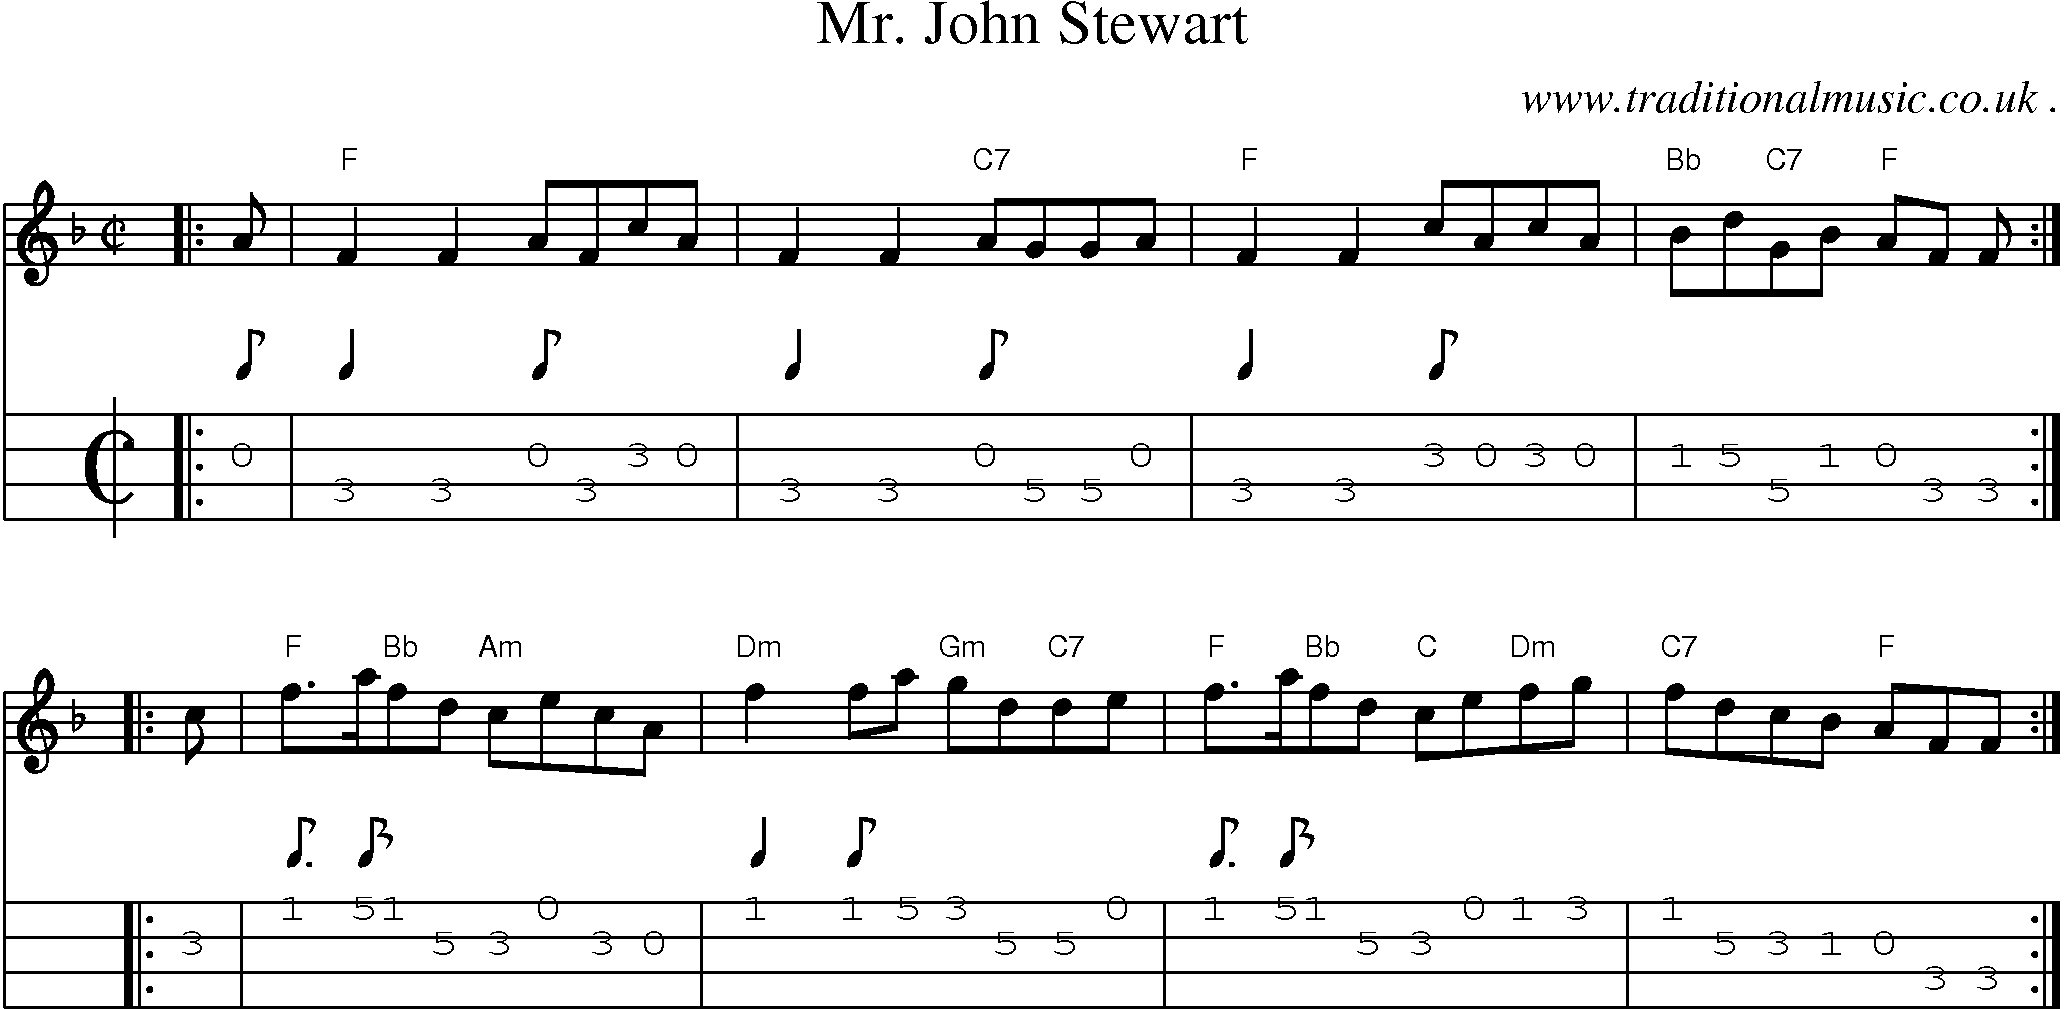 Sheet-music  score, Chords and Mandolin Tabs for Mr John Stewart